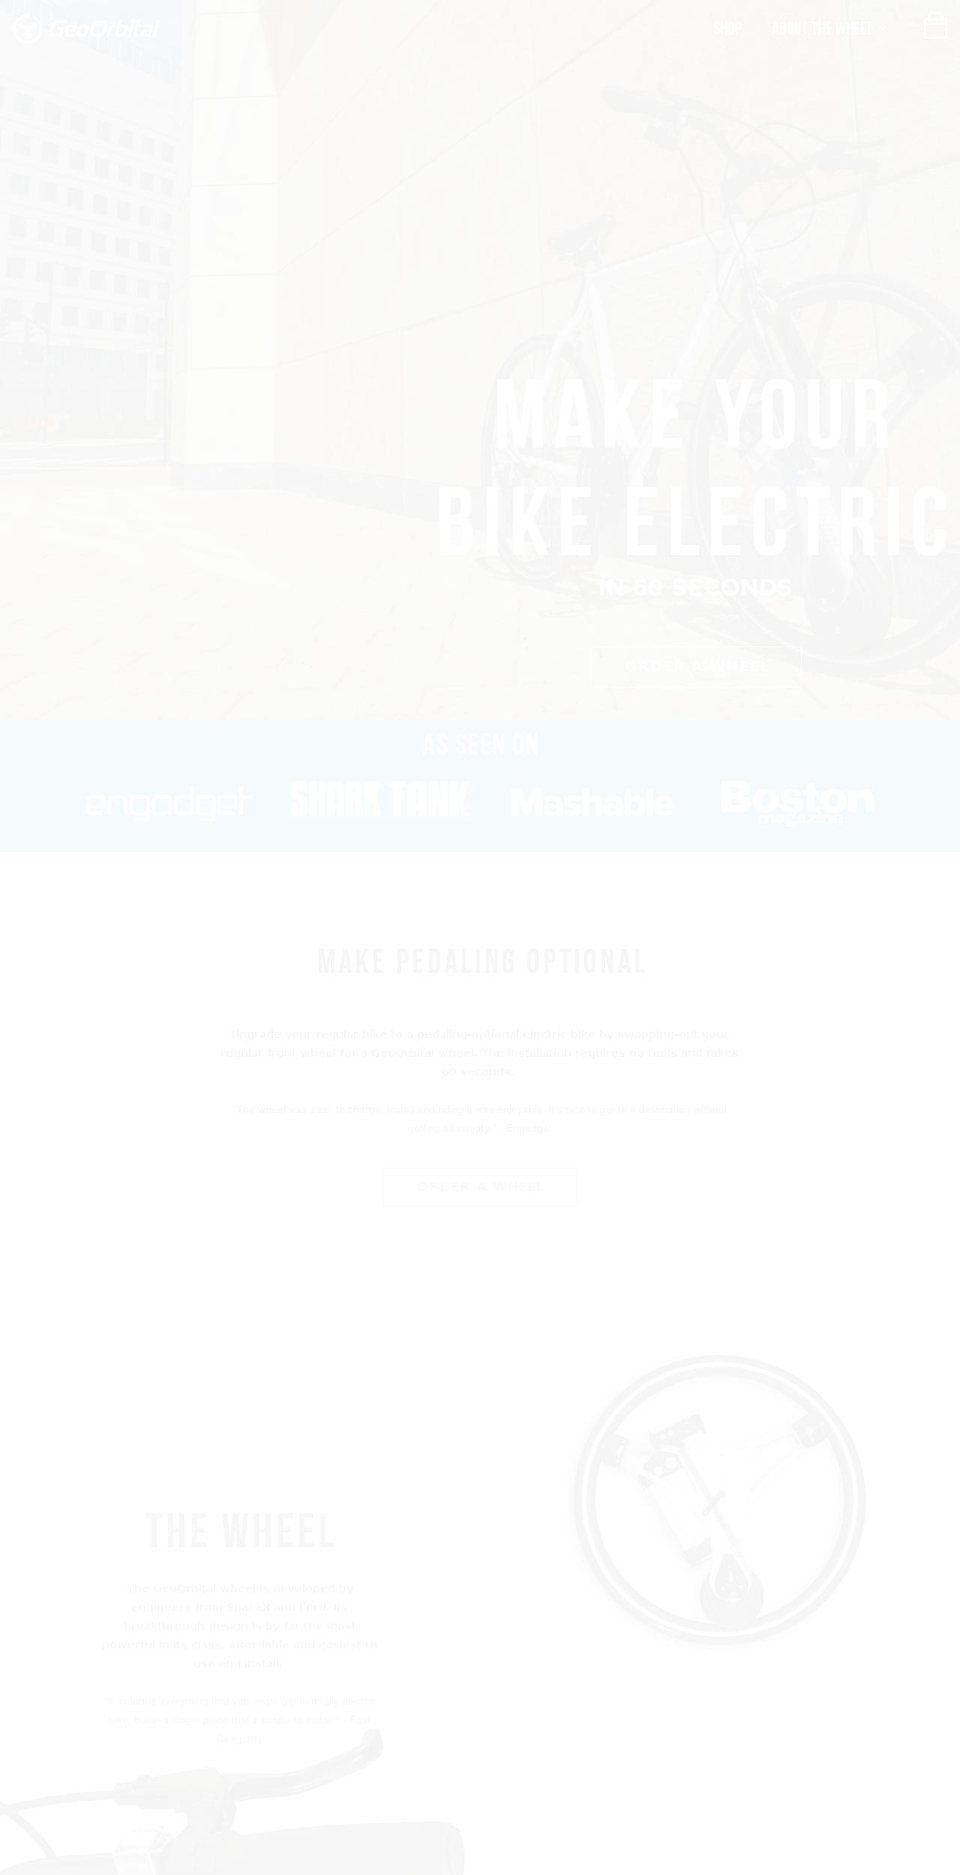 geoo.bike shopify website screenshot